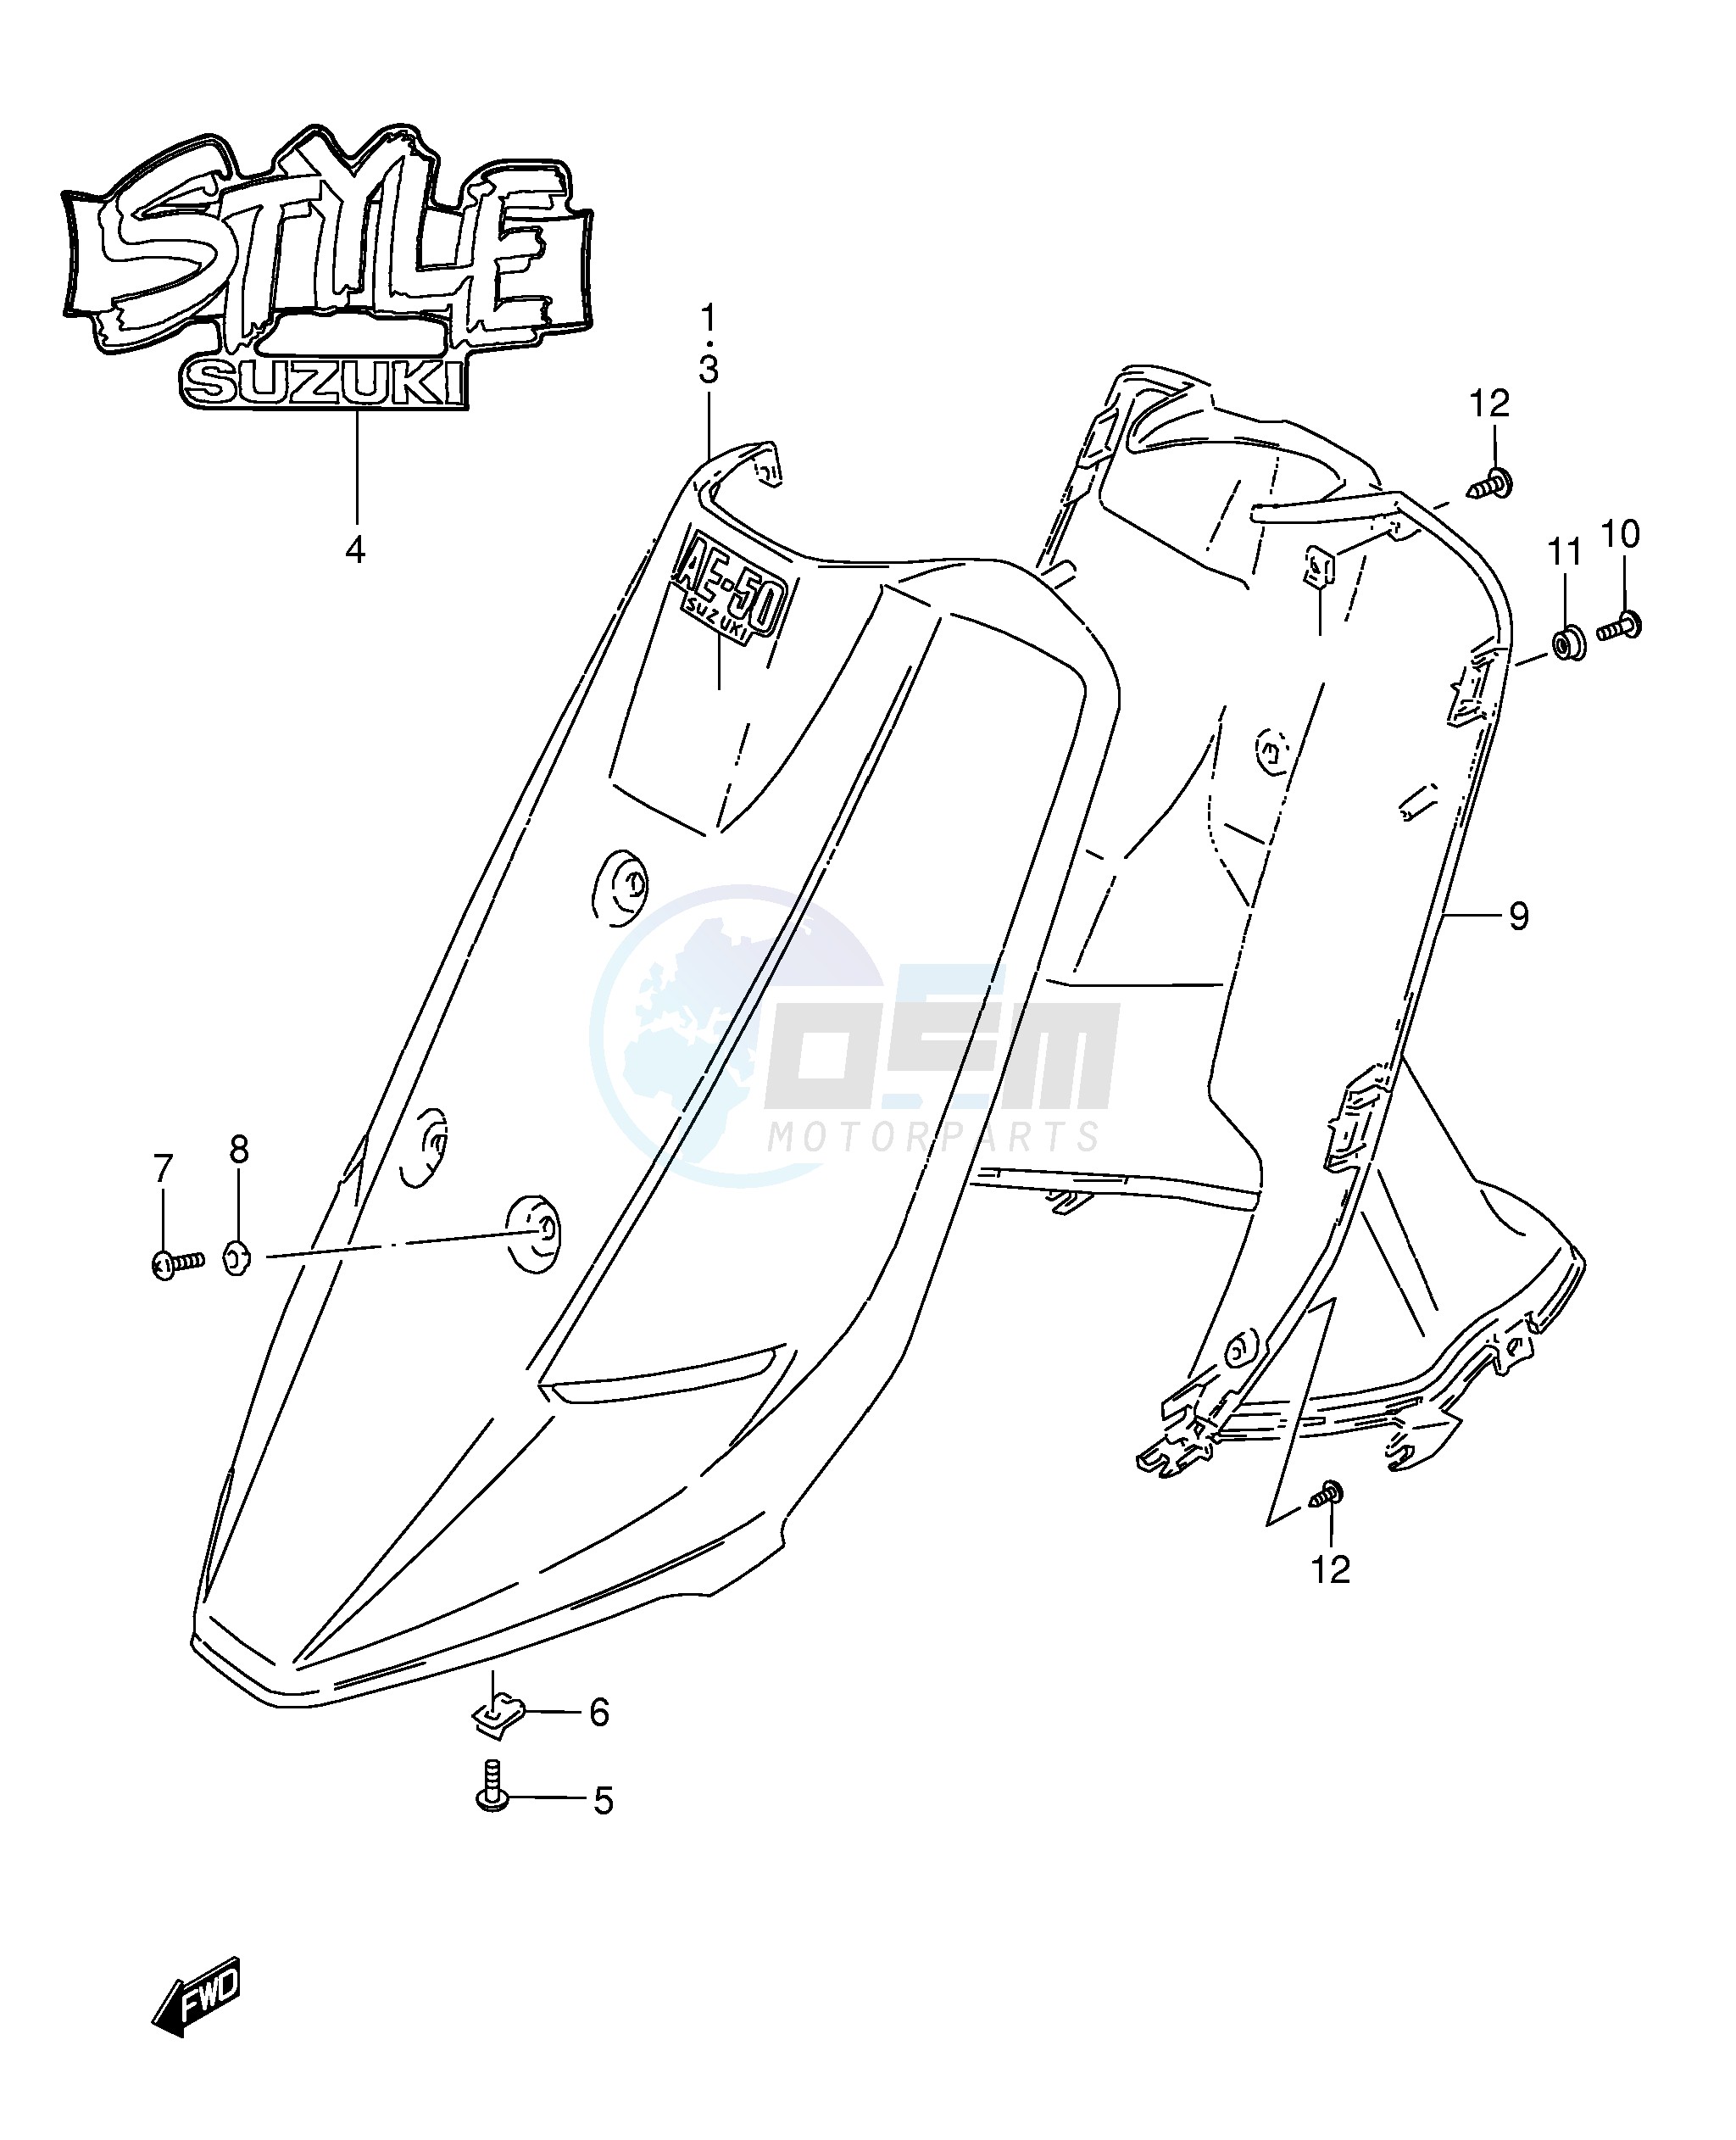 LEG SHIELD (MODEL L M) blueprint